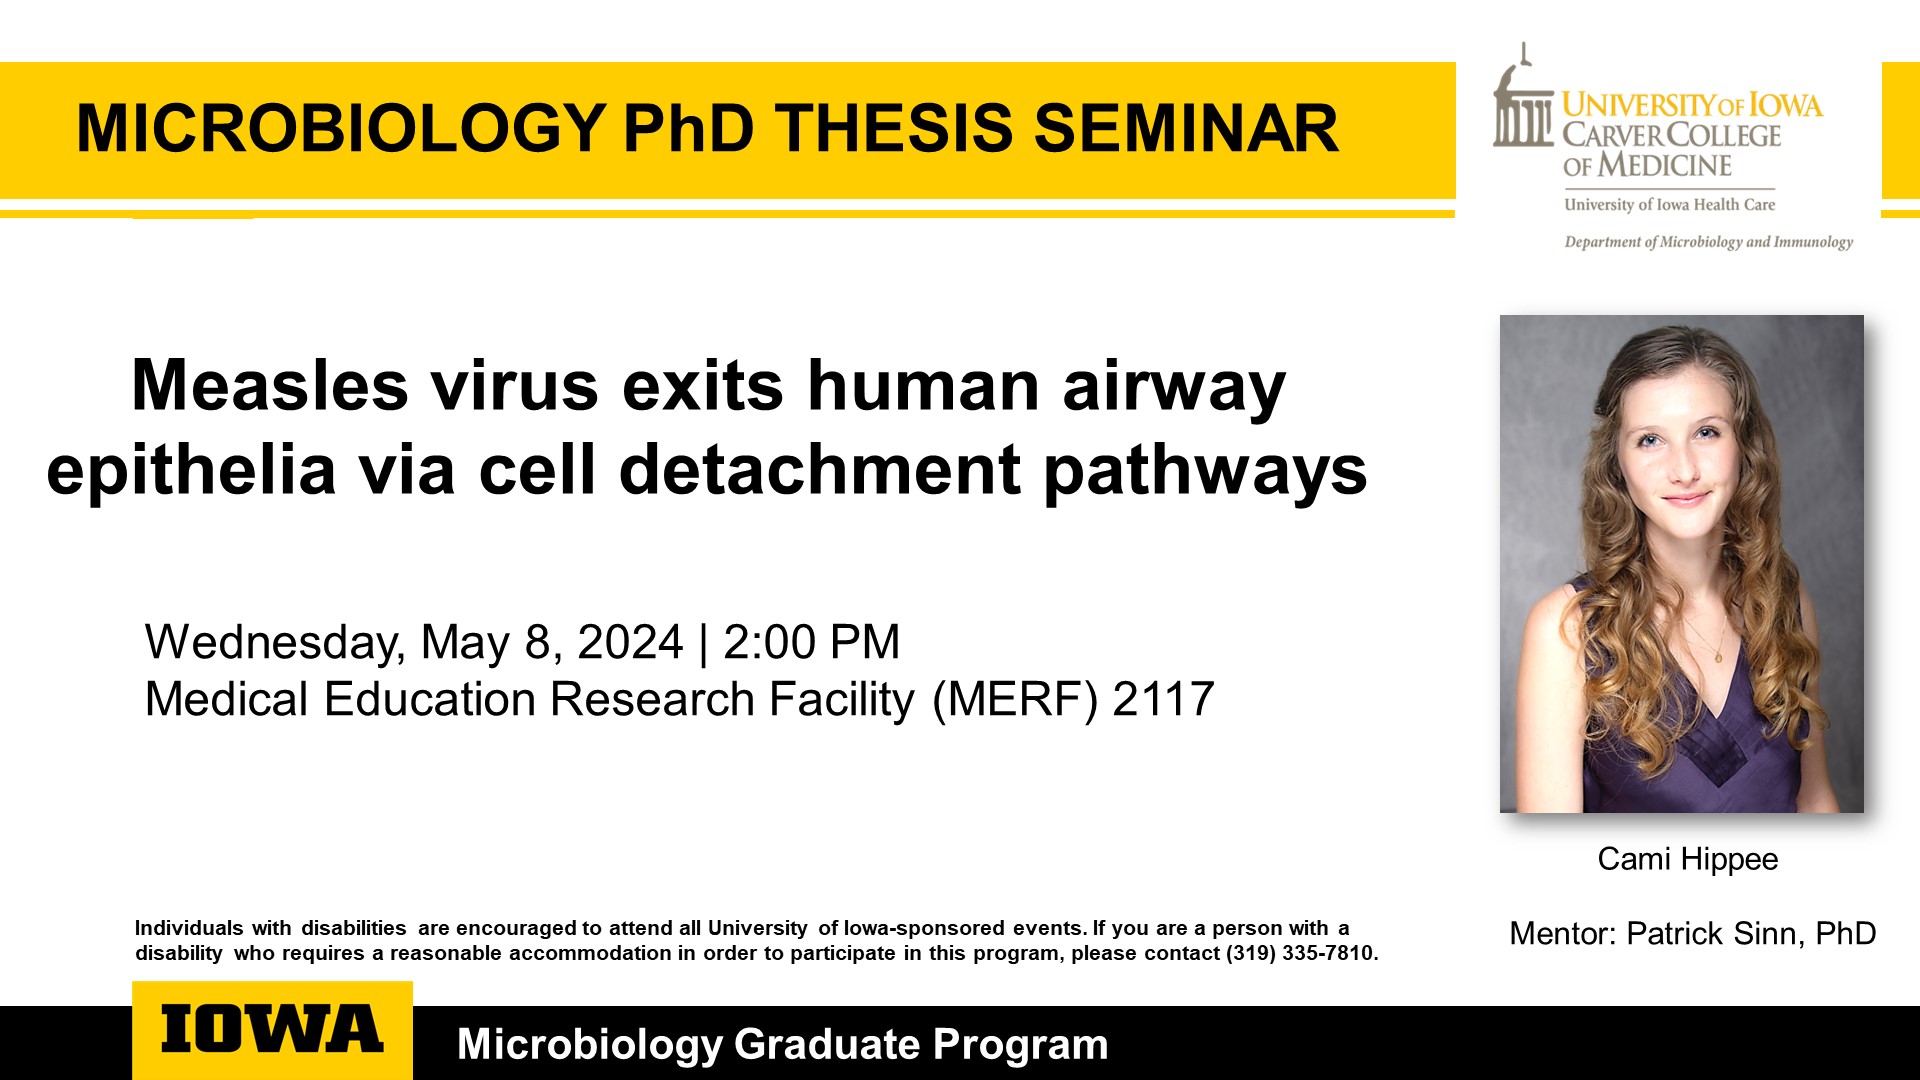 Microbiology Graduate Program - PhD Seminar, Cami Hippee promotional image